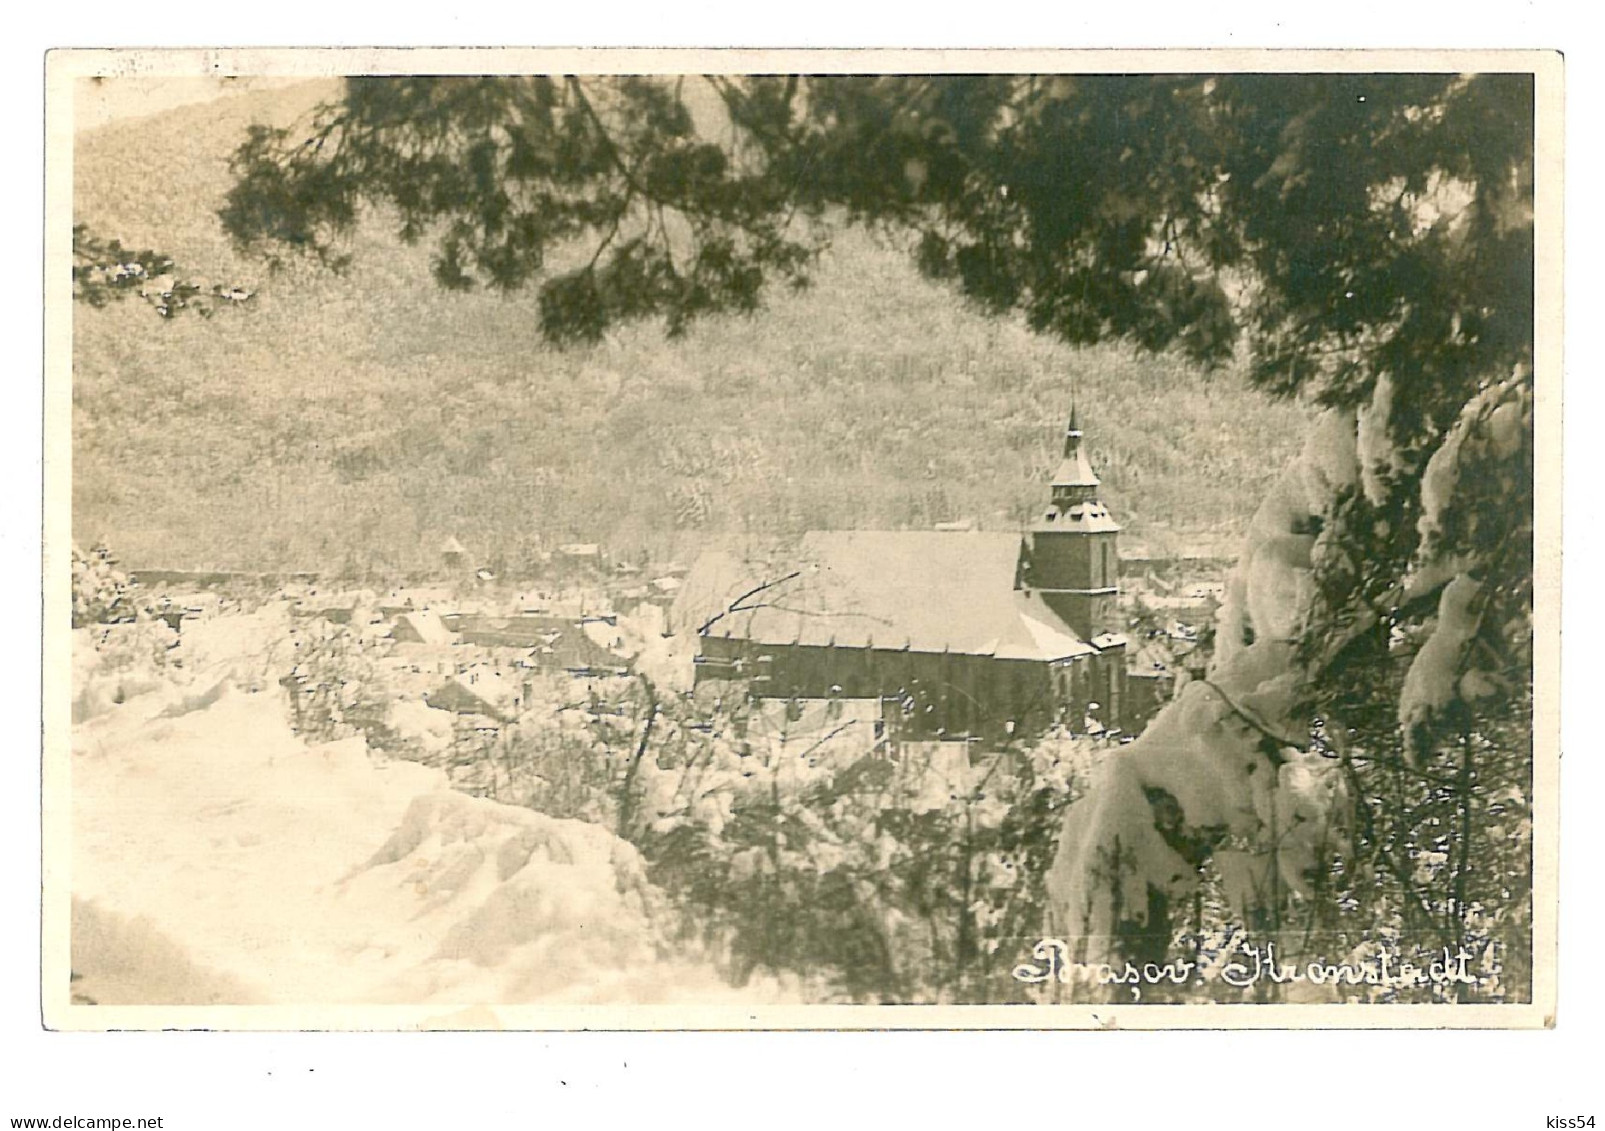 RO 81 - 9568 BRASOV, Winter, Black Church, Romania - Old Postcard, Real PHOTO - Used - 1929 - Roumanie